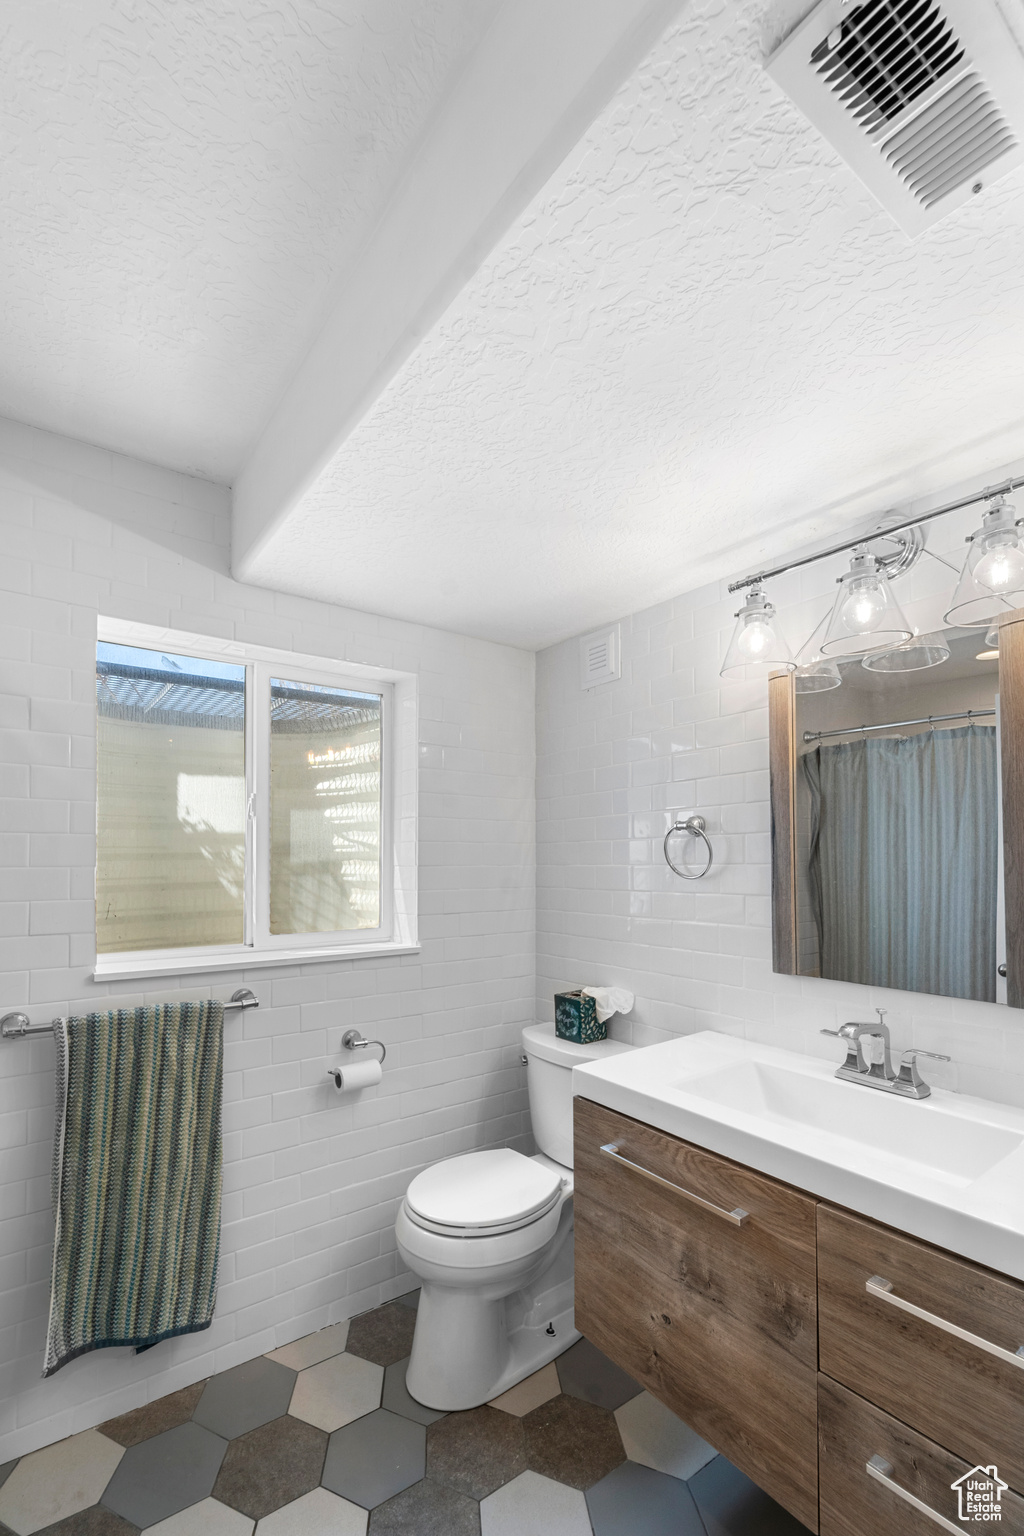 Bathroom featuring tile walls, tile floors, toilet, and vanity